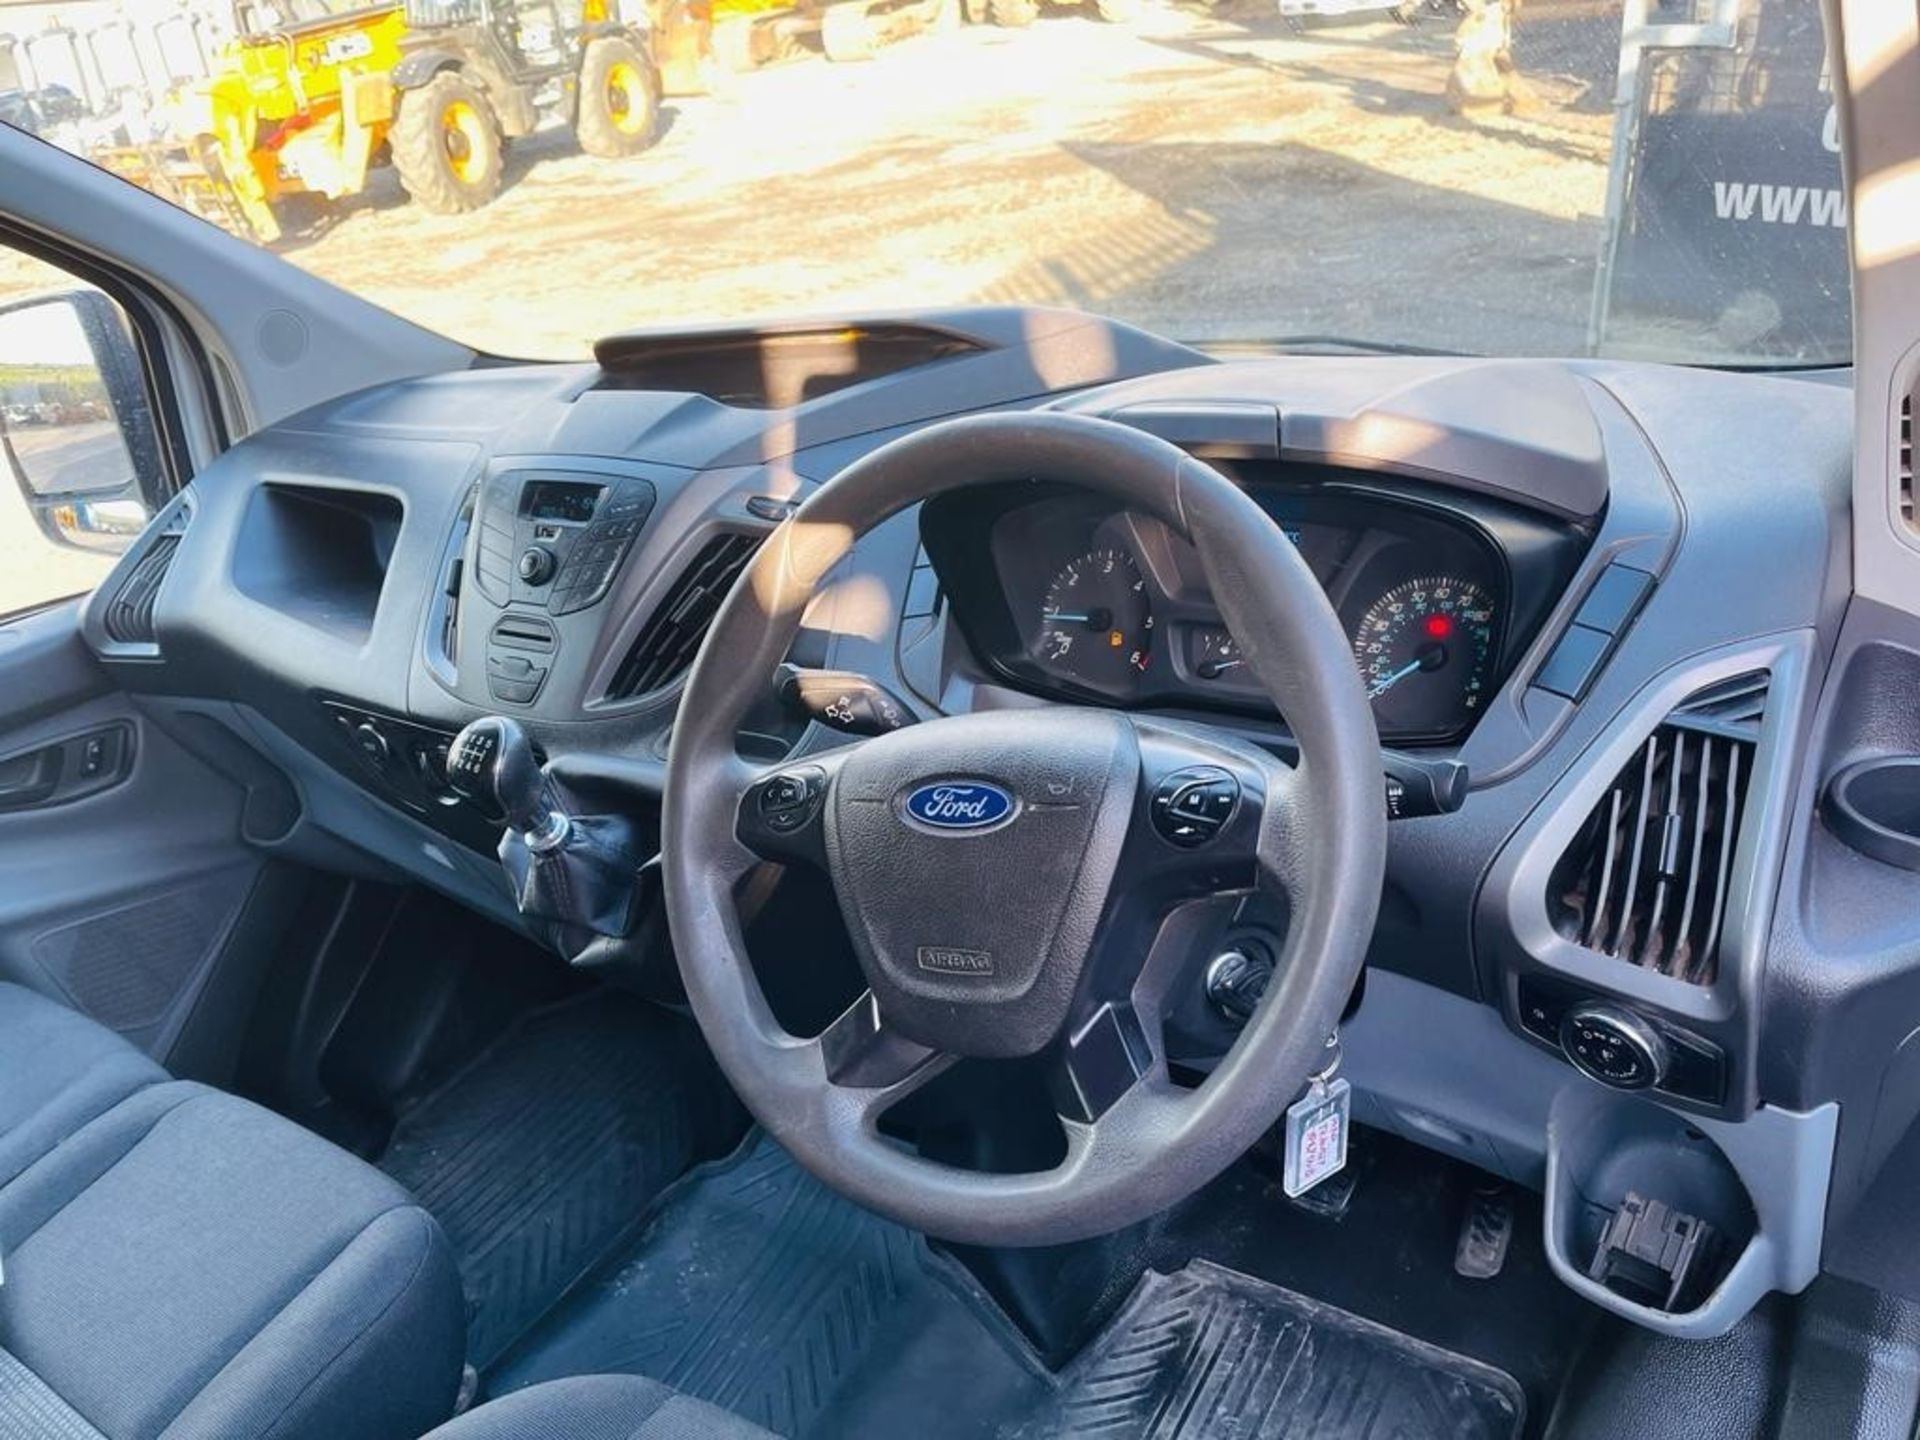 2017, Ford Transit Custom 270 LR P/V - Image 3 of 13